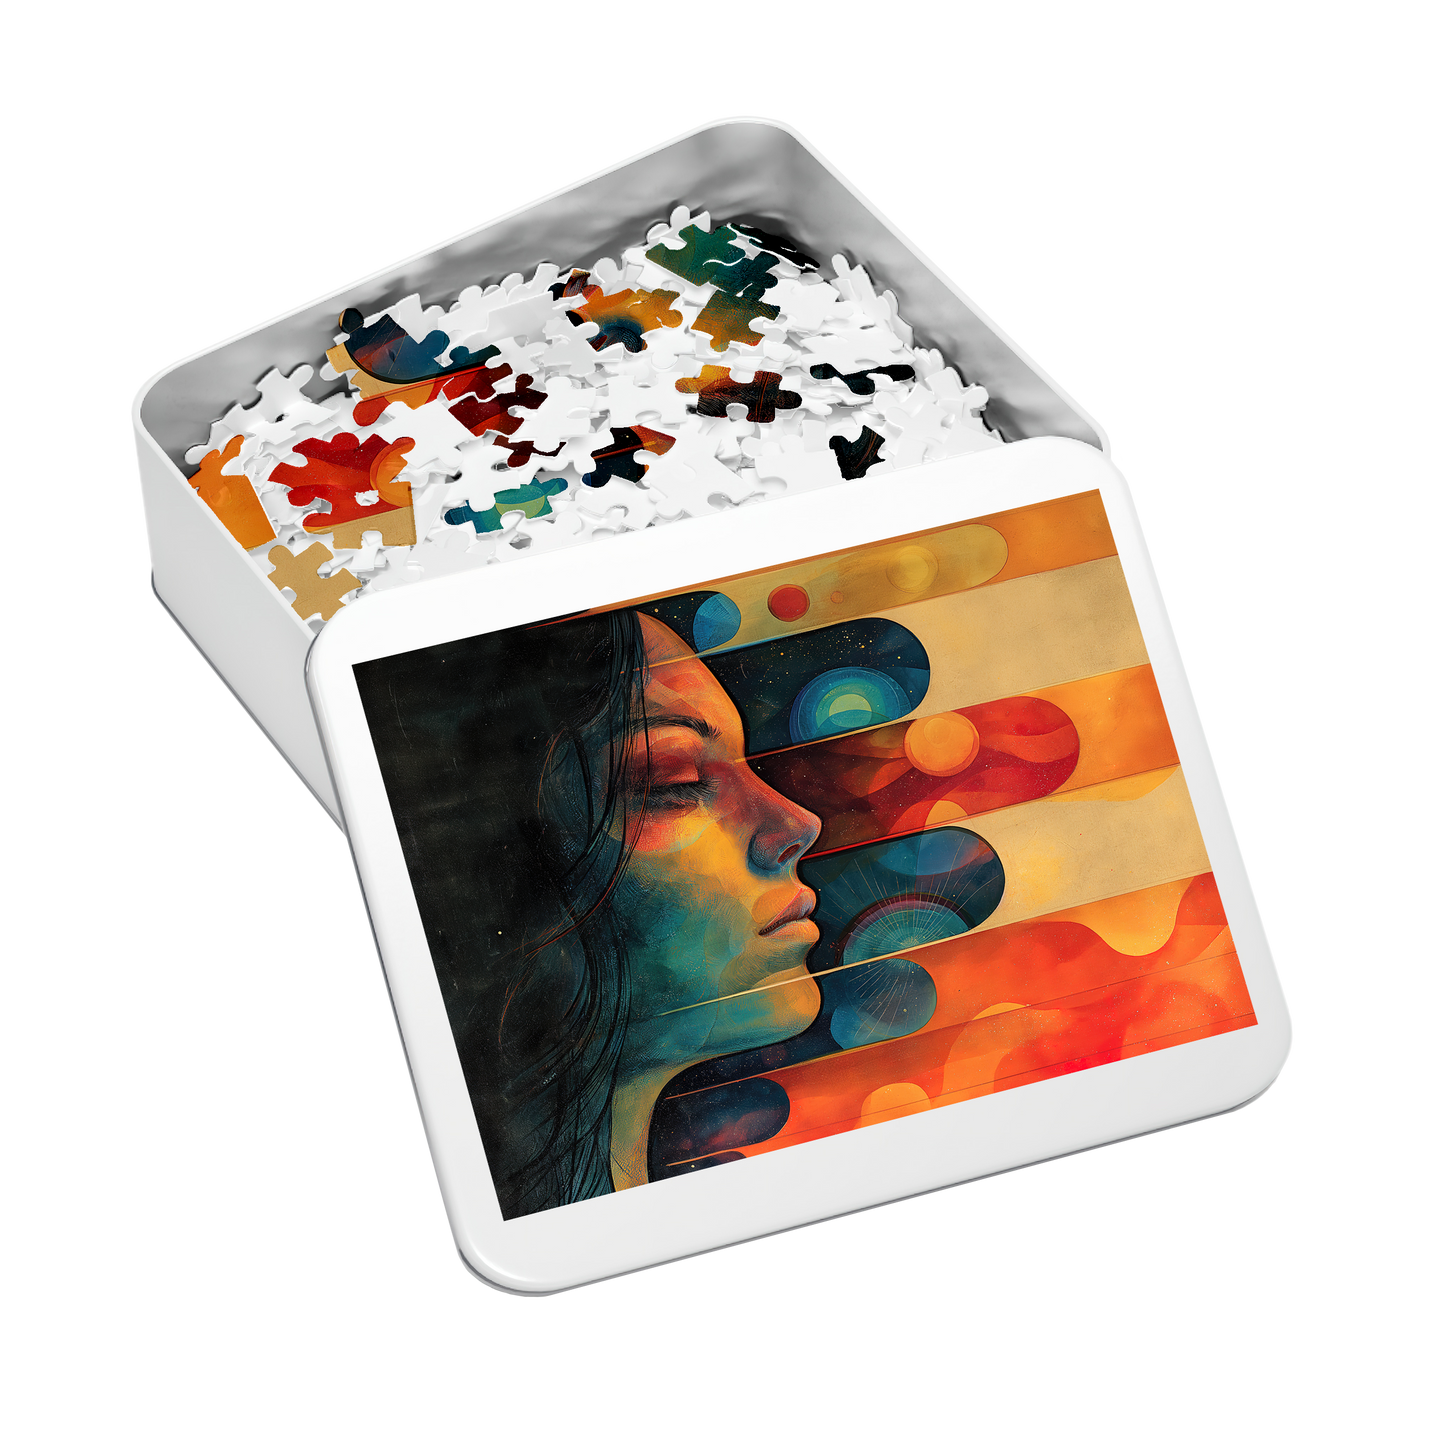 Homeward Bound - Premium Jigsaw Puzzle, Vibrant, Sci-fi - Multiple Sizes Available